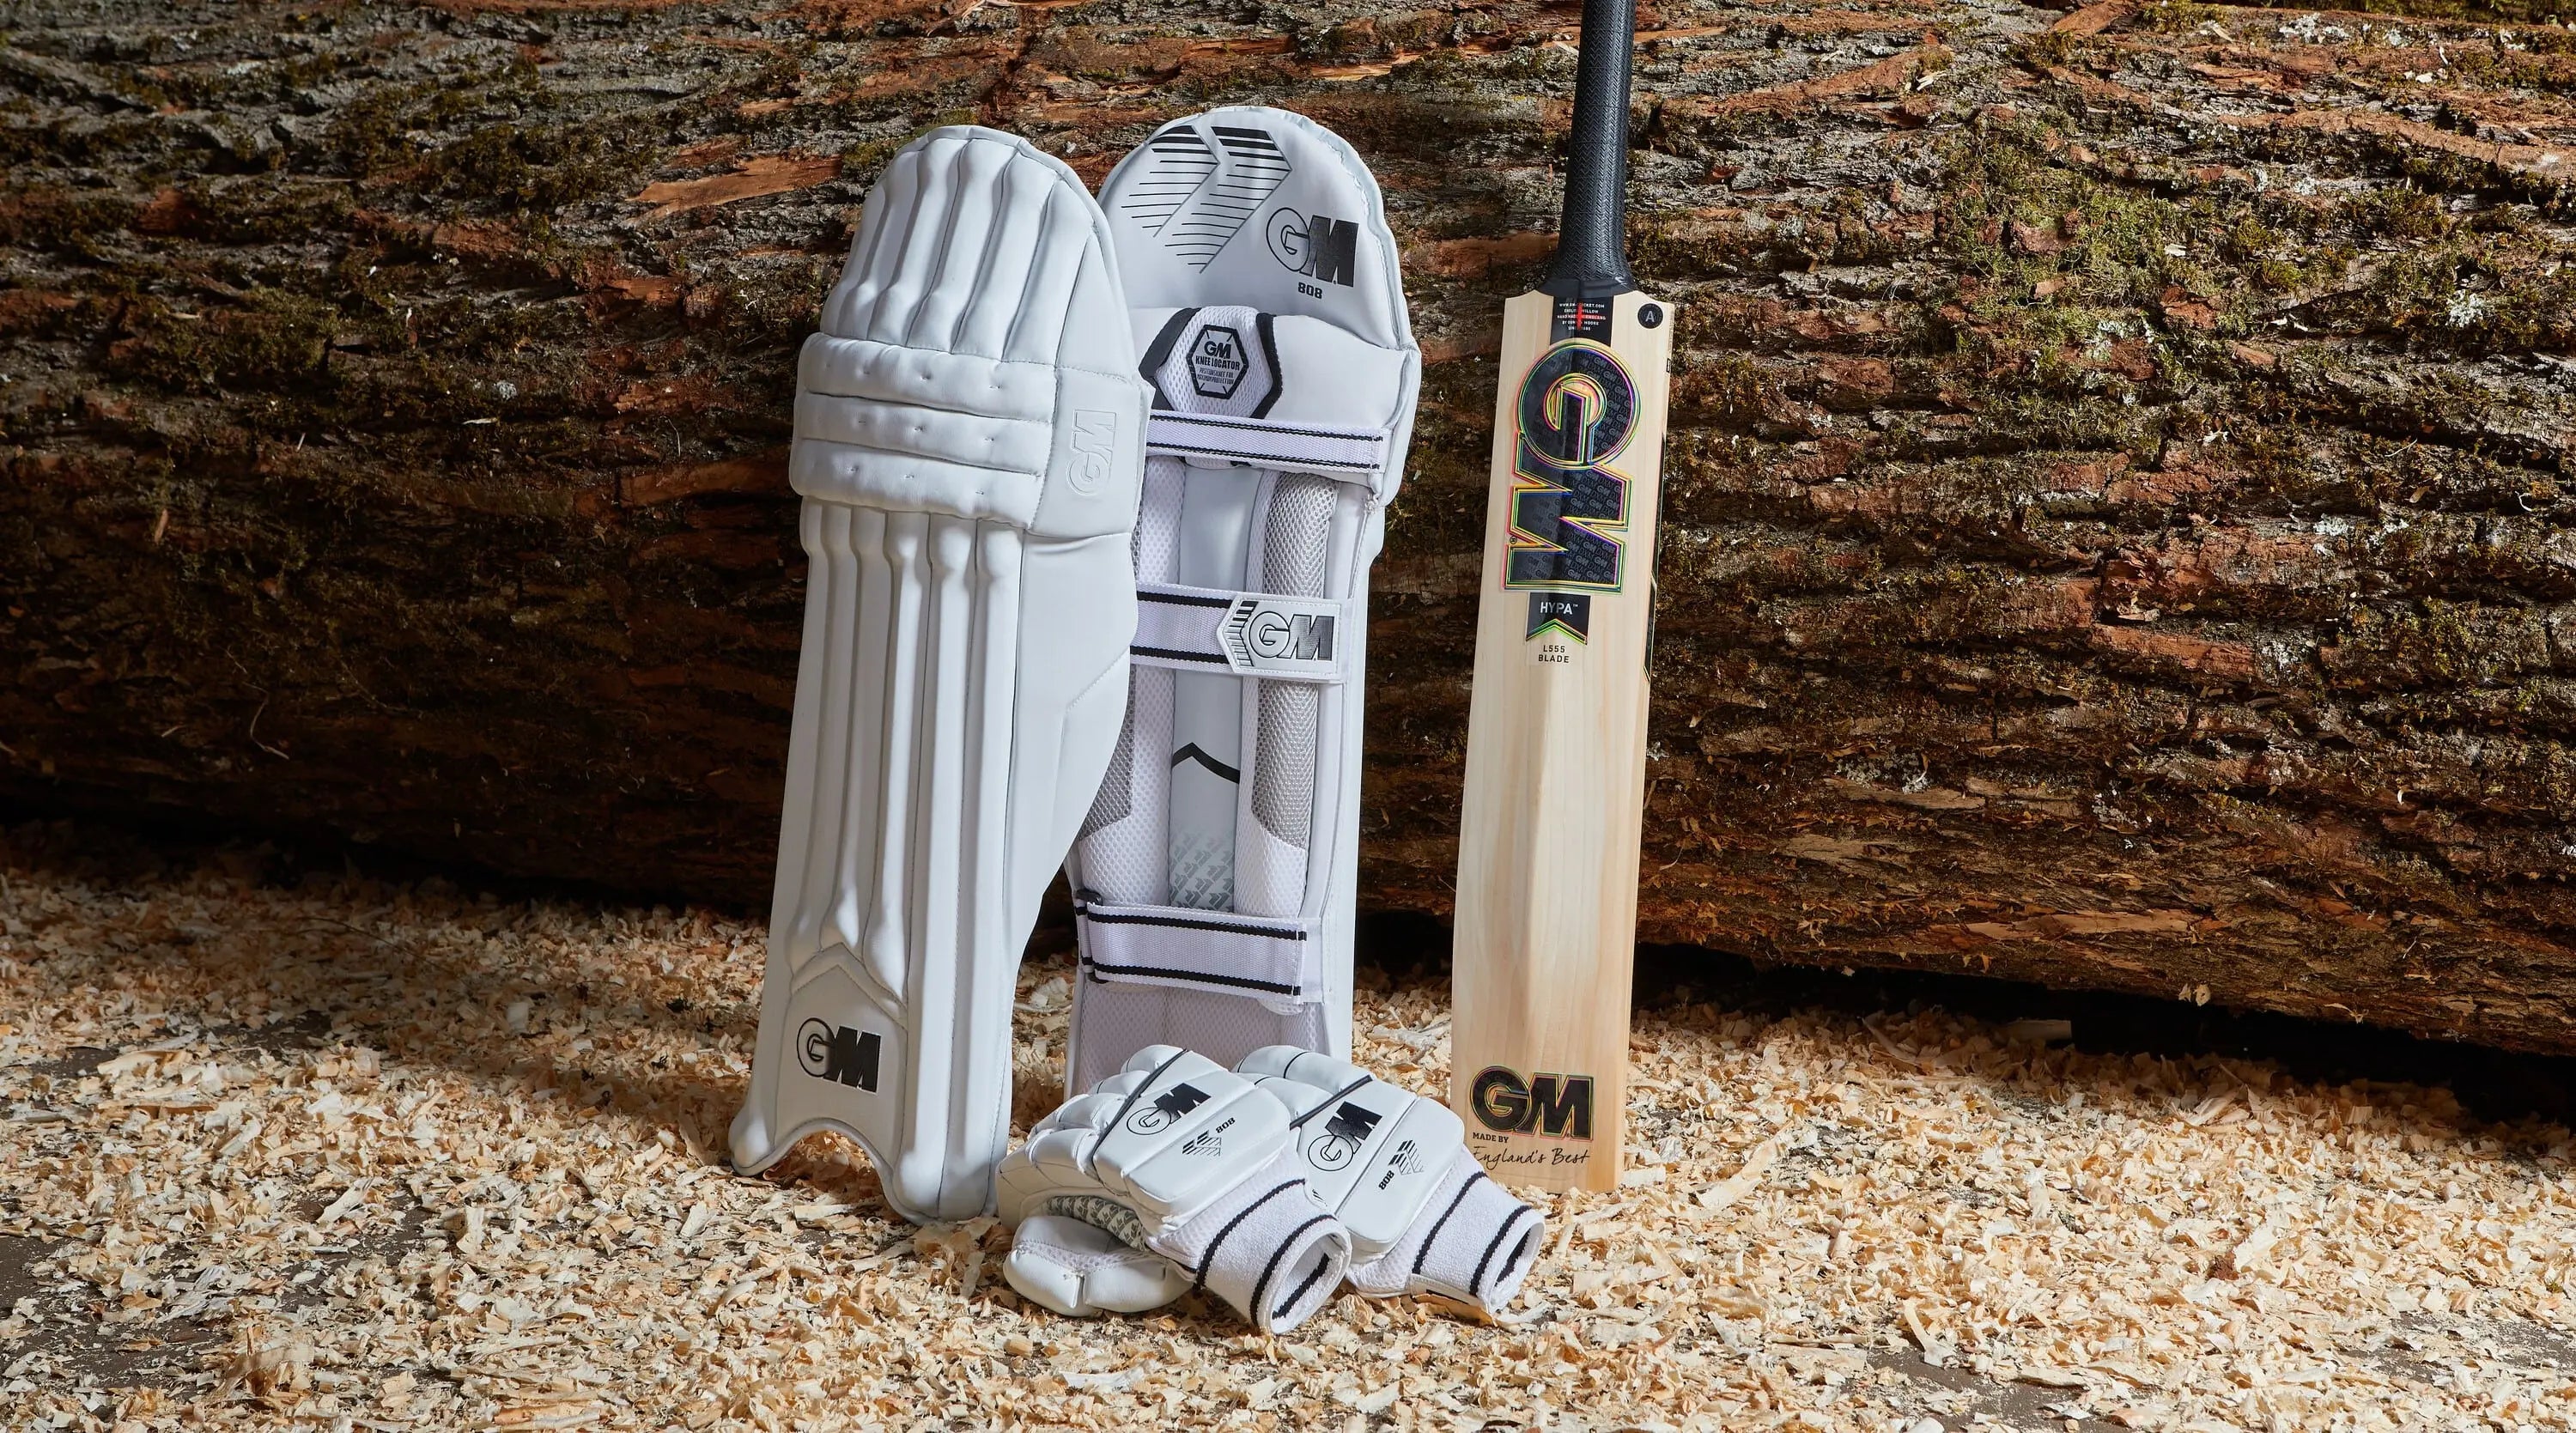 GM (Gunn & Moore) Cricket Batting Pads